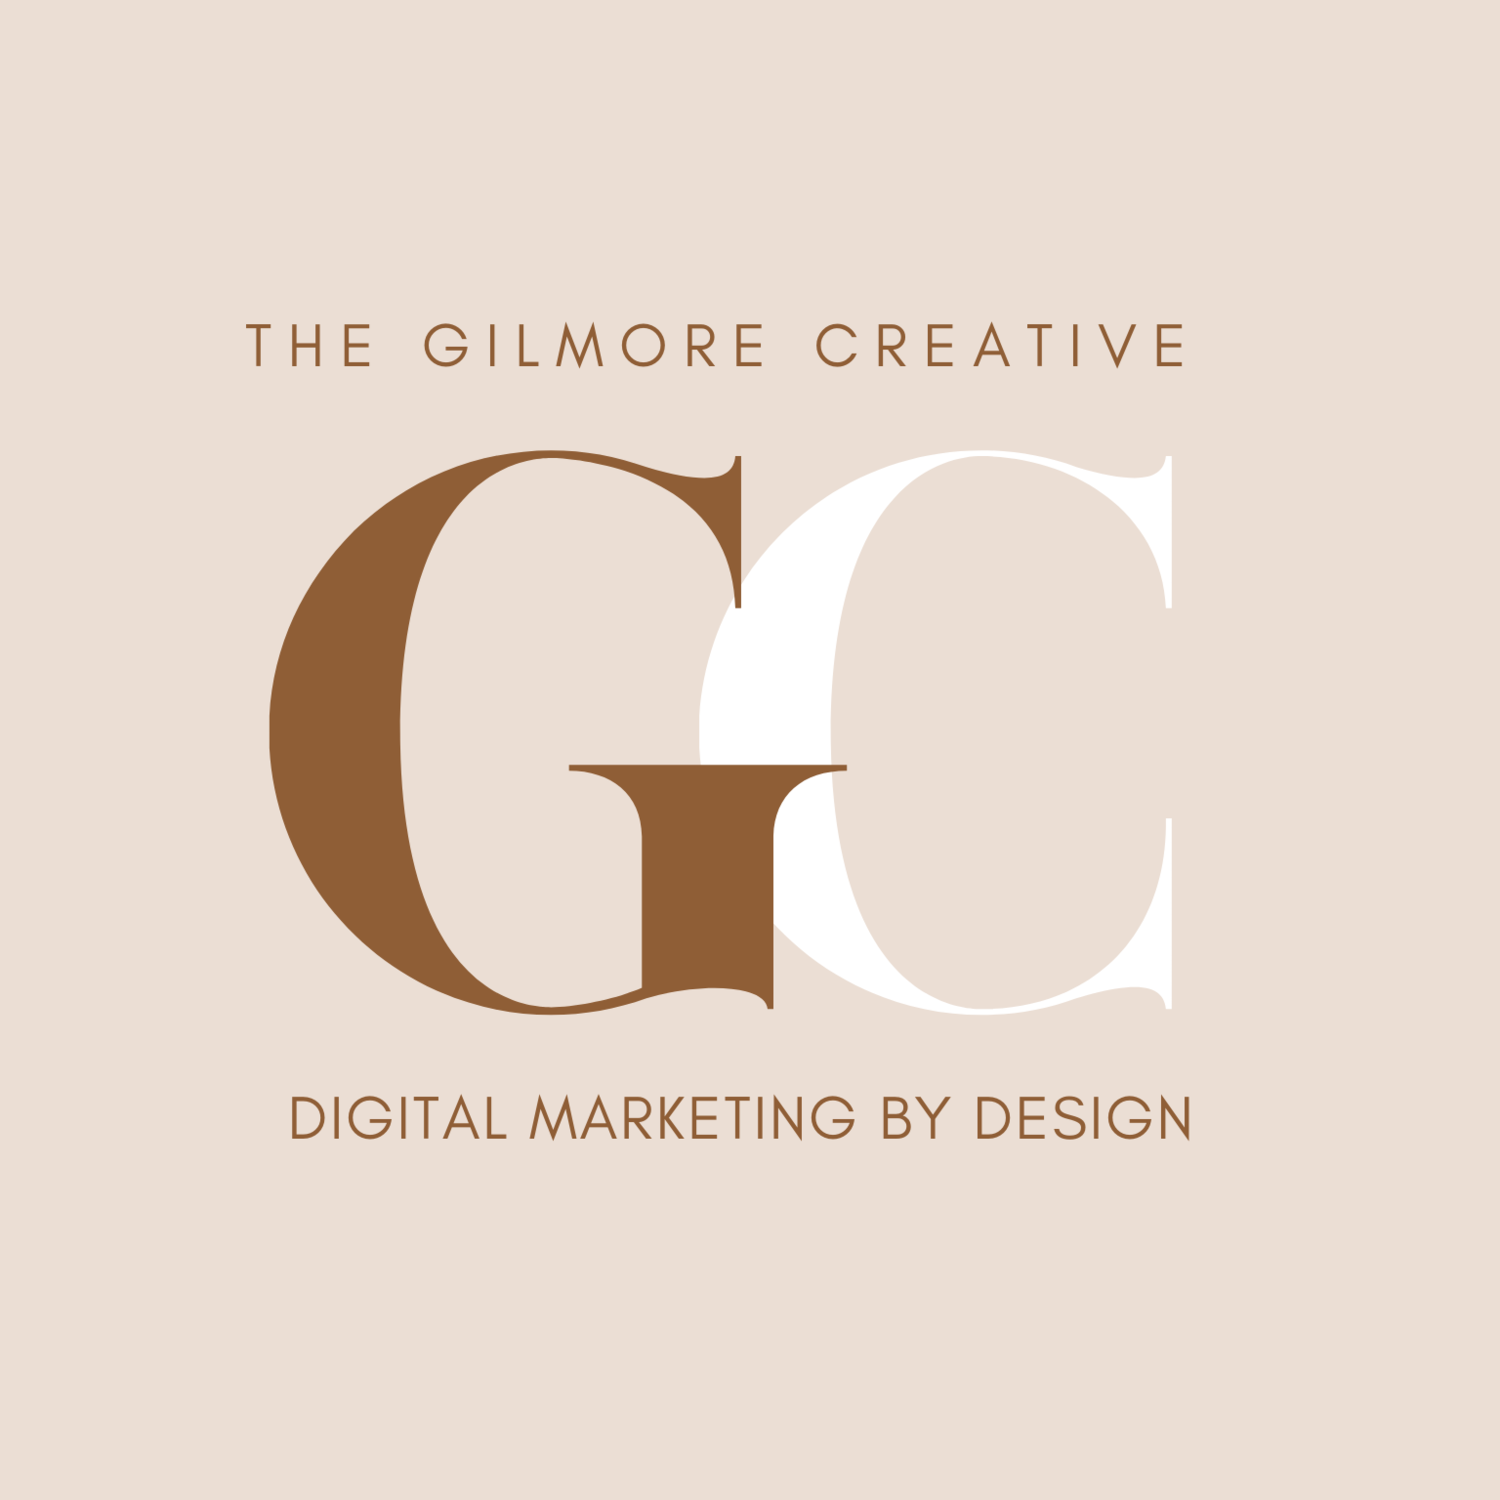 The Gilmore Creative